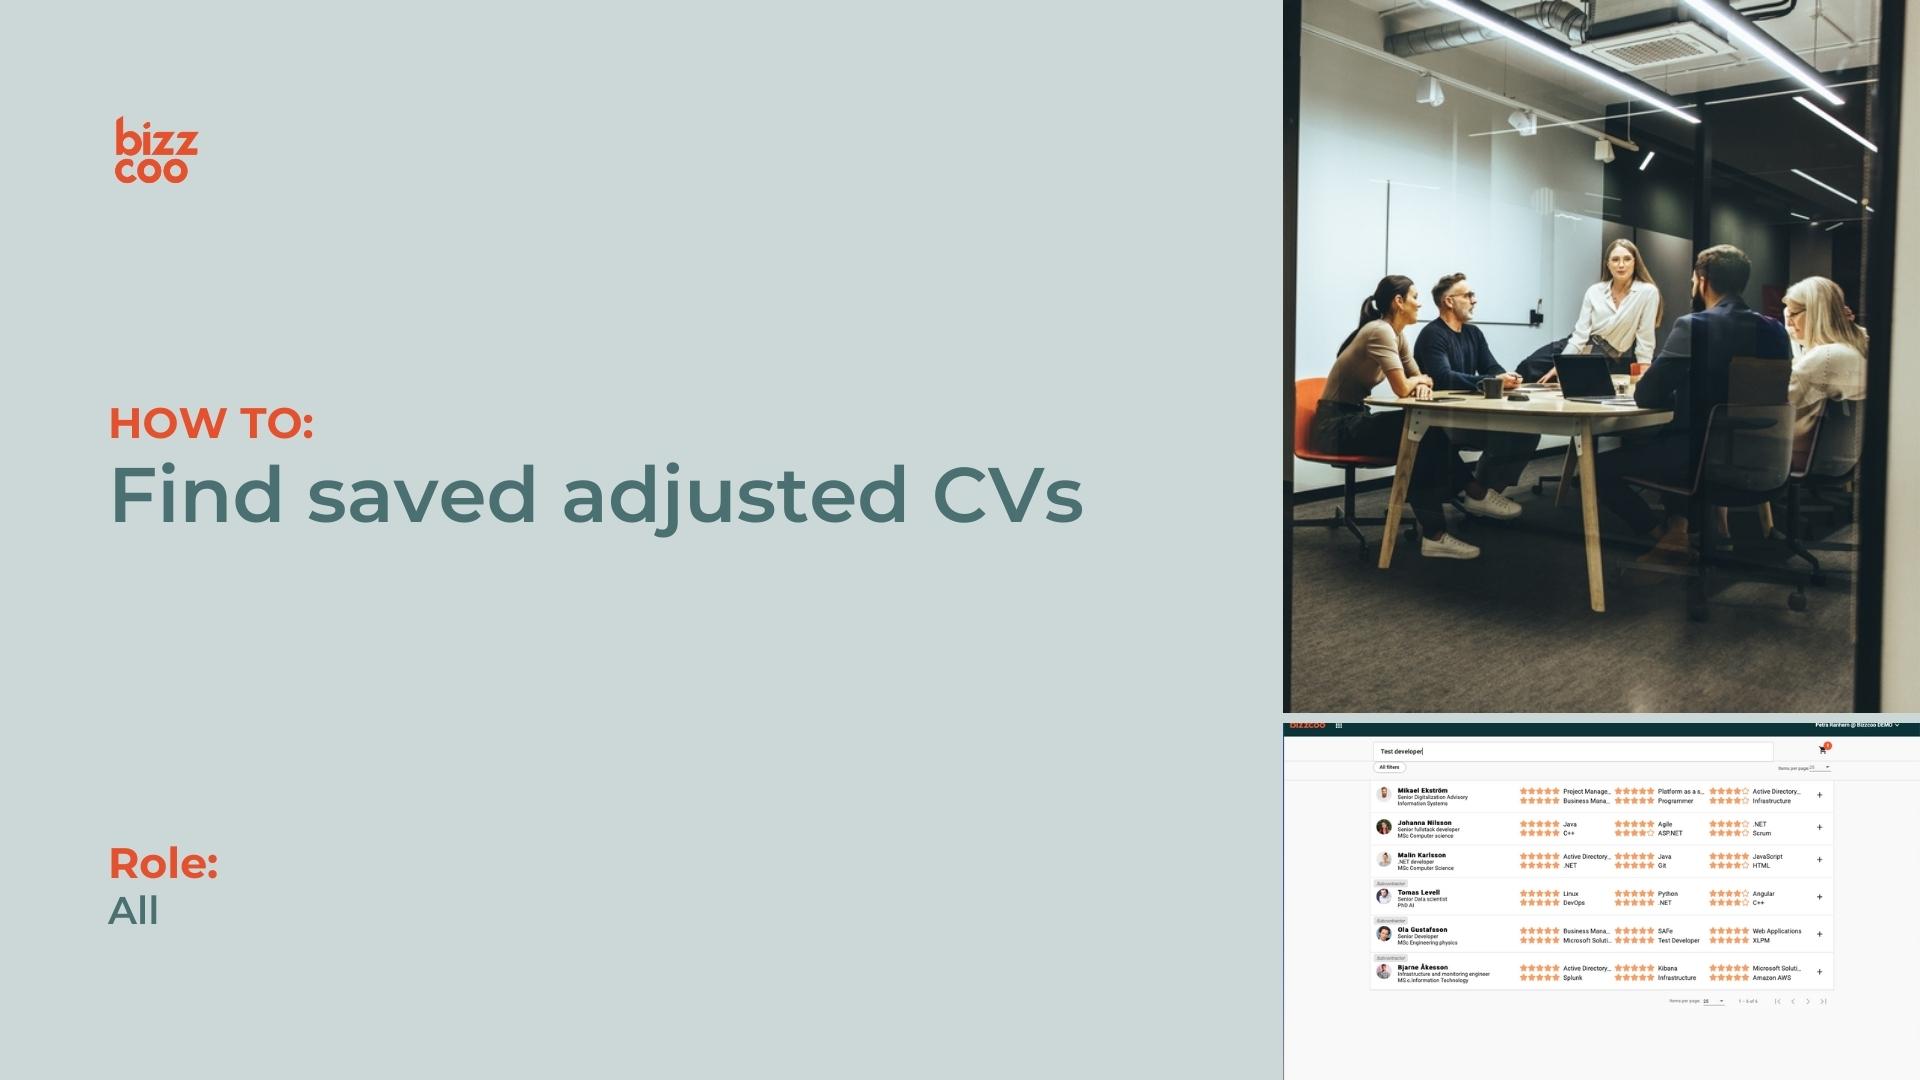 How to find saved adjusted CVs